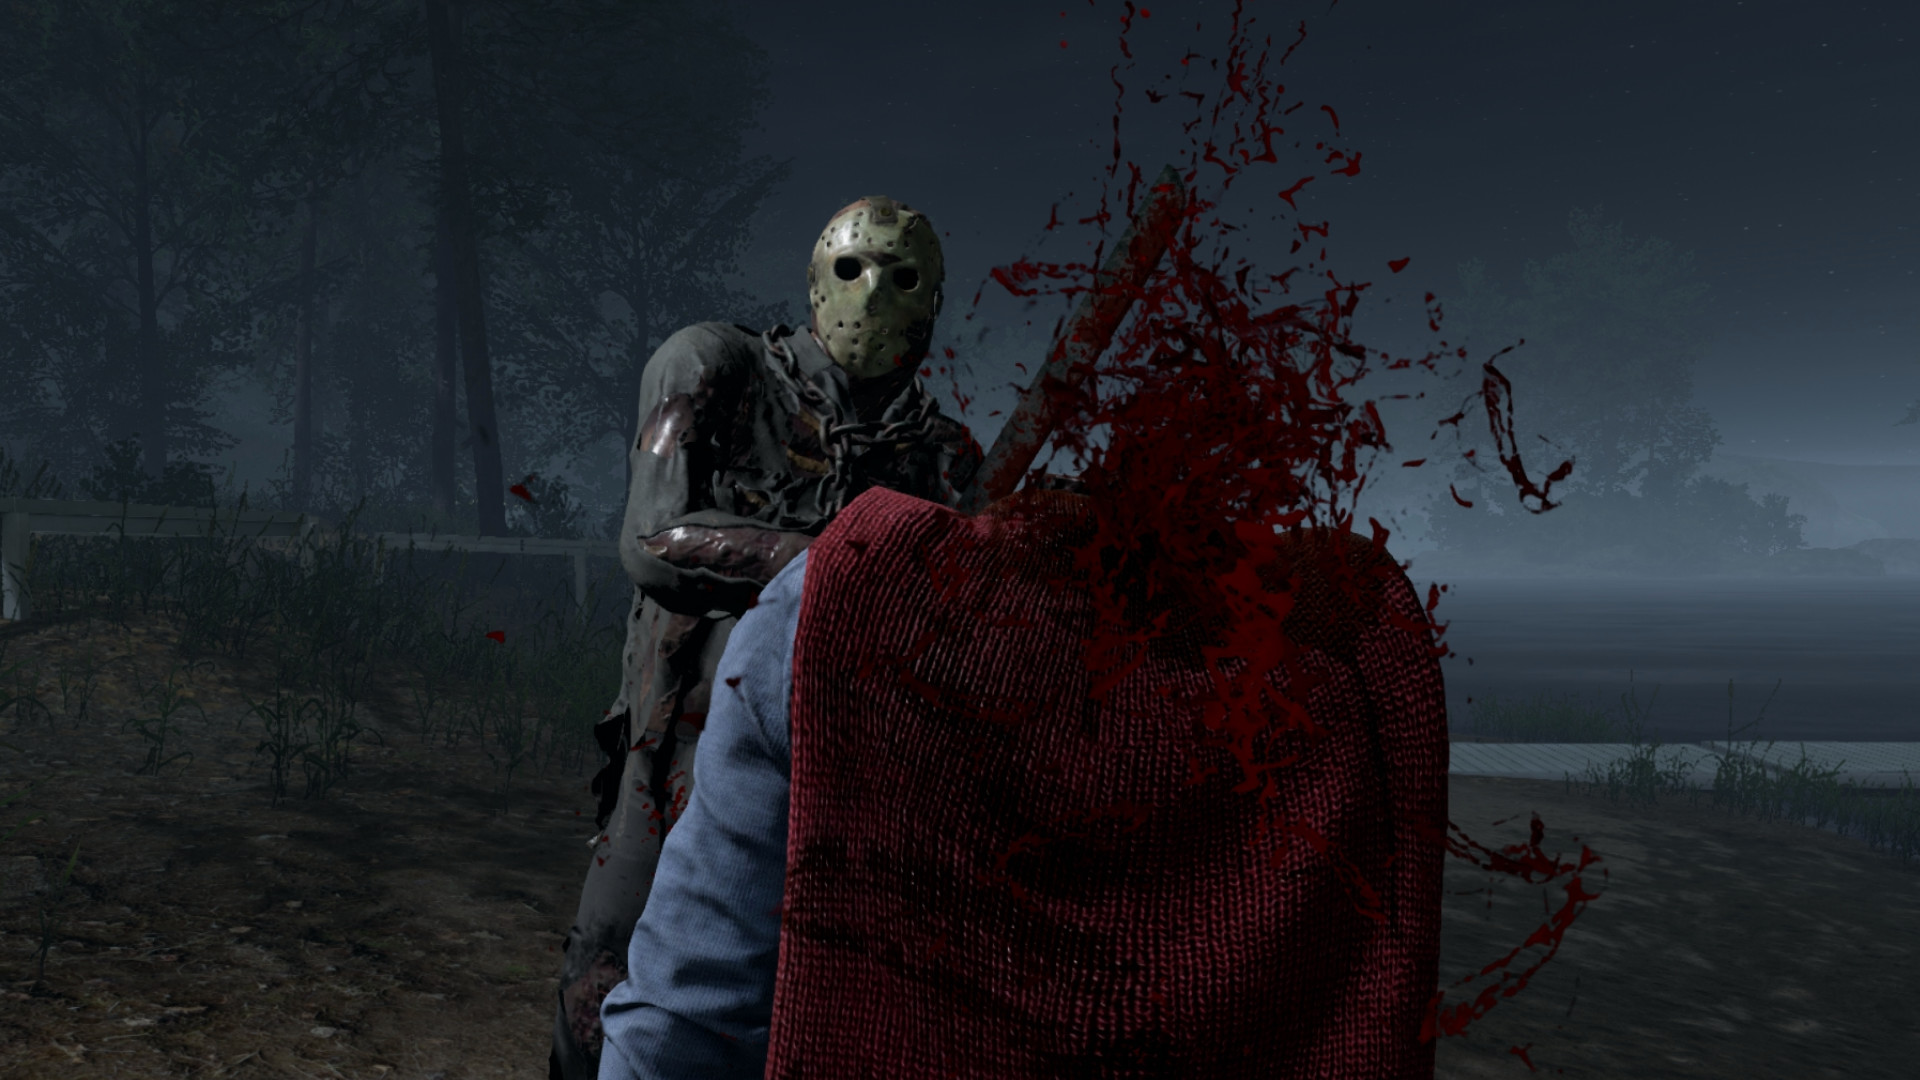 Скриншот Jason Part 7 Machete Kill Pack 